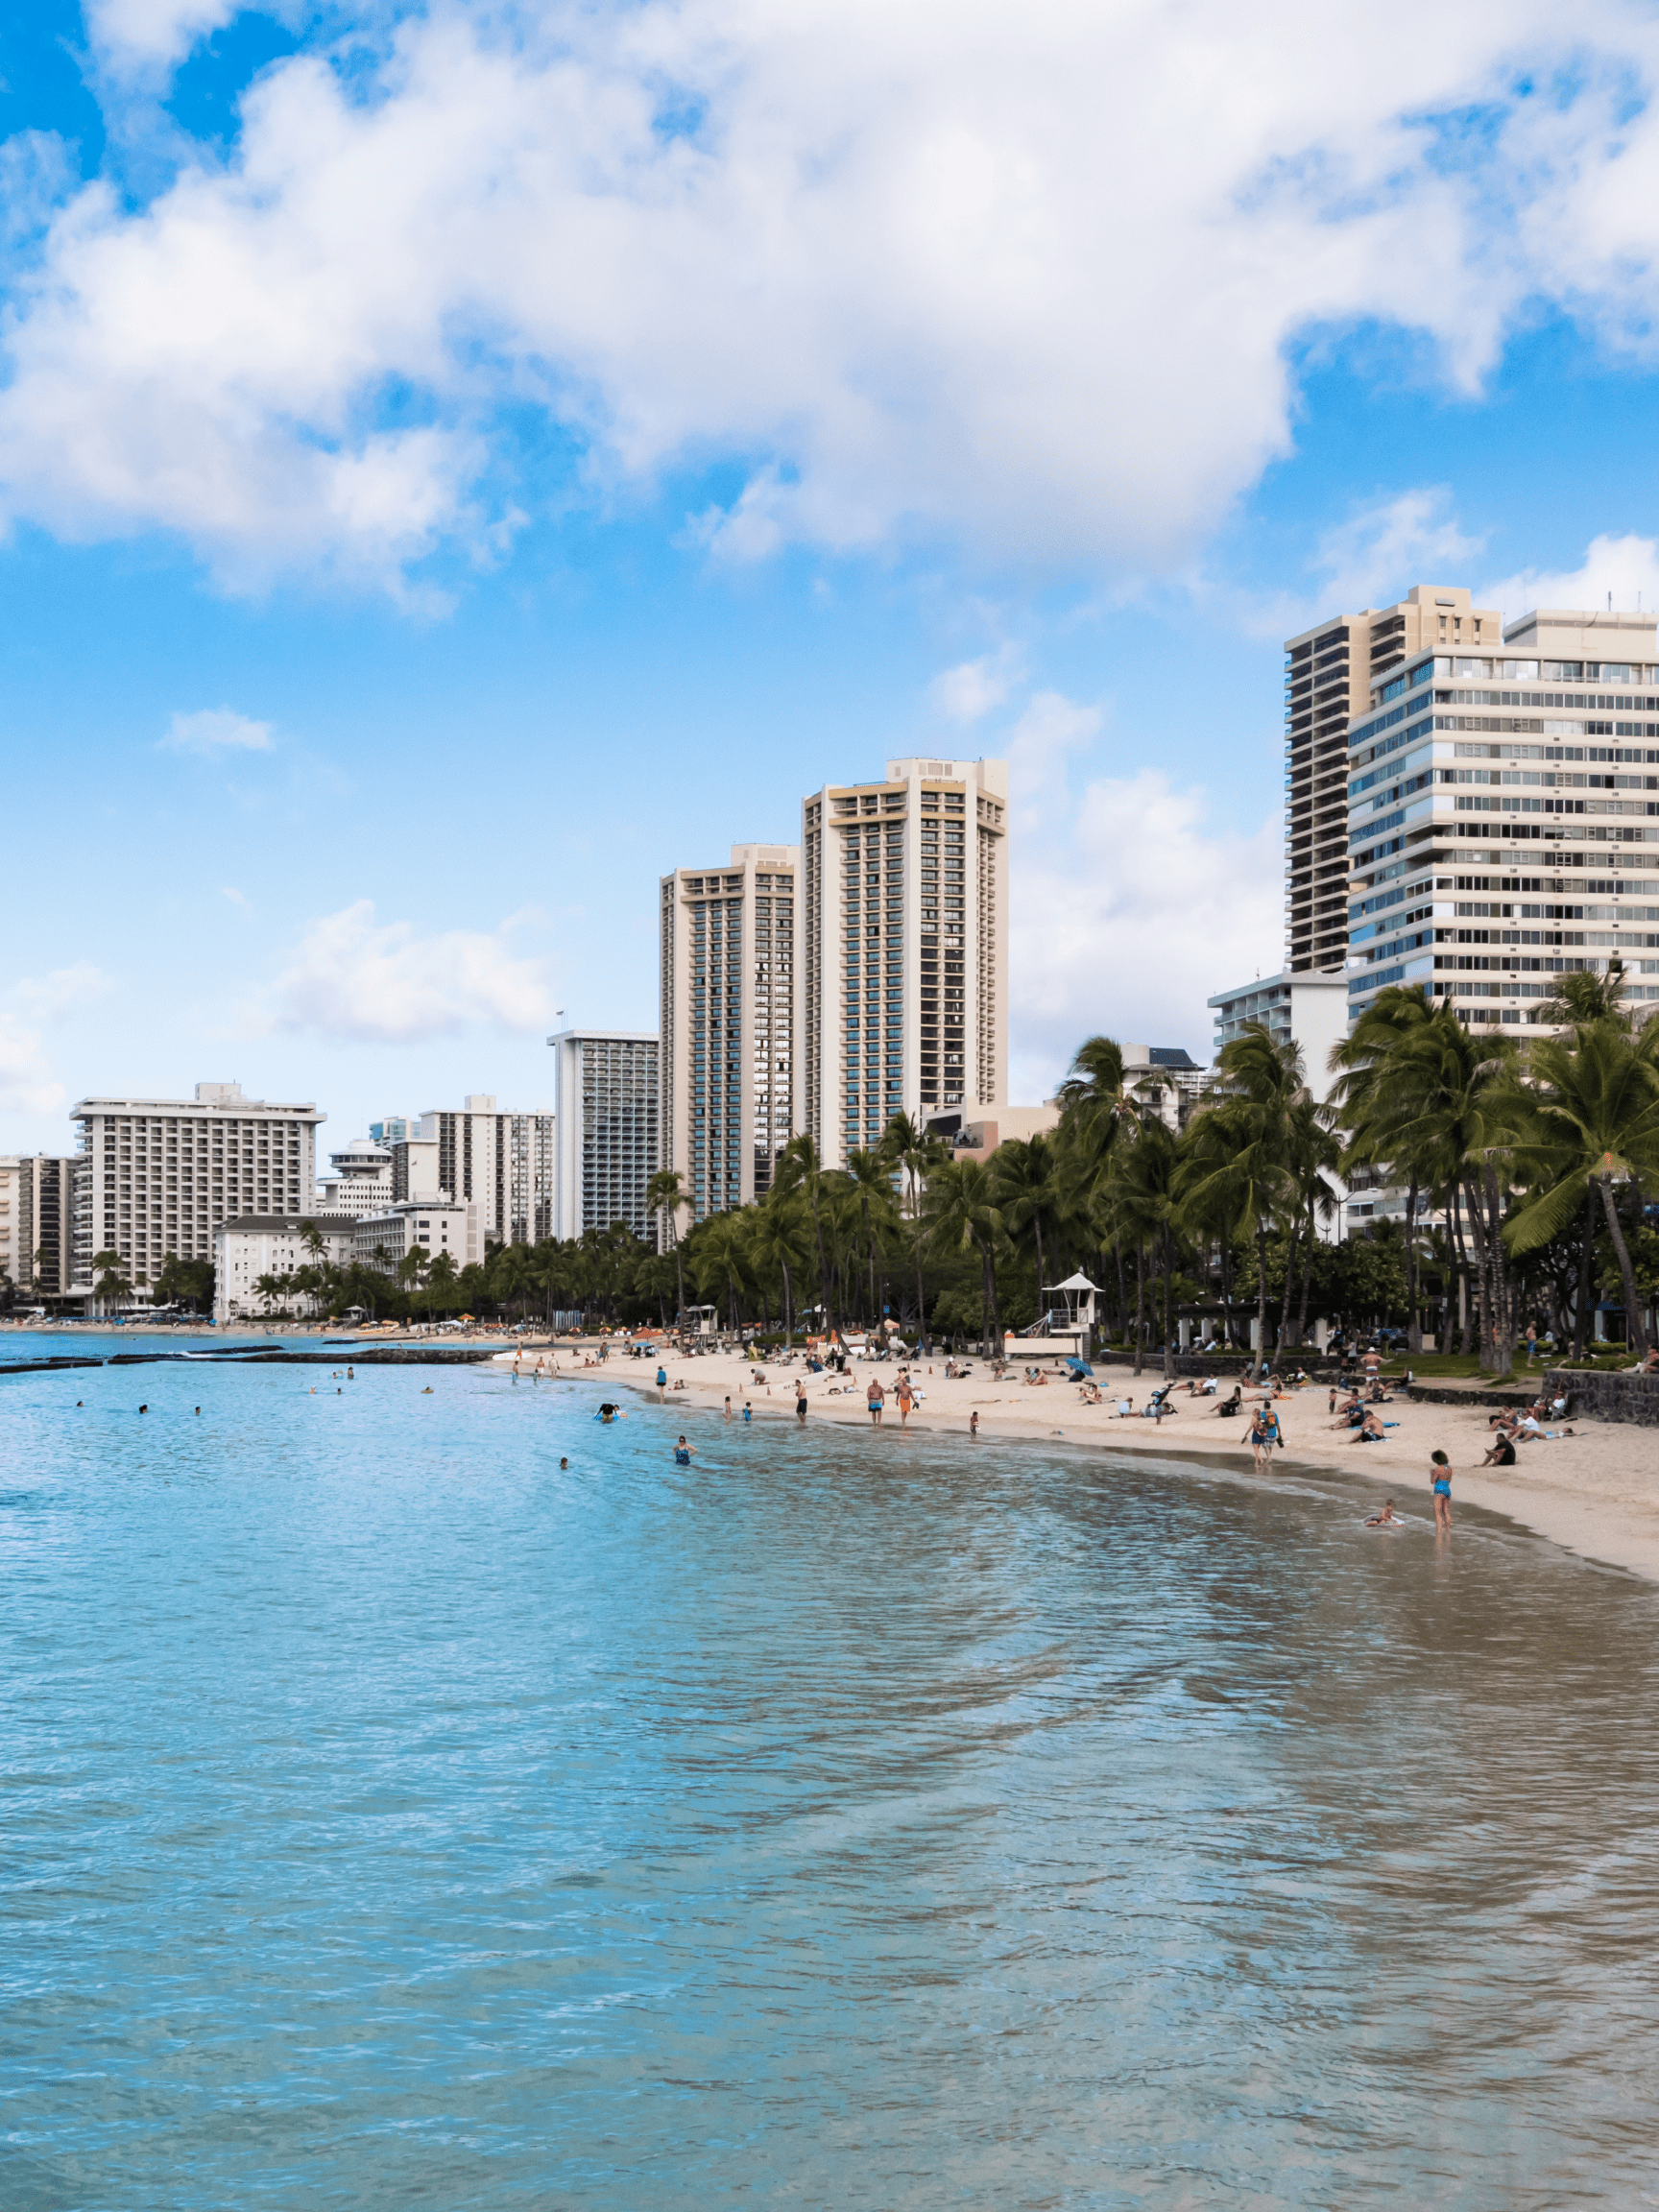 Waikiki beach hotels on the ocean